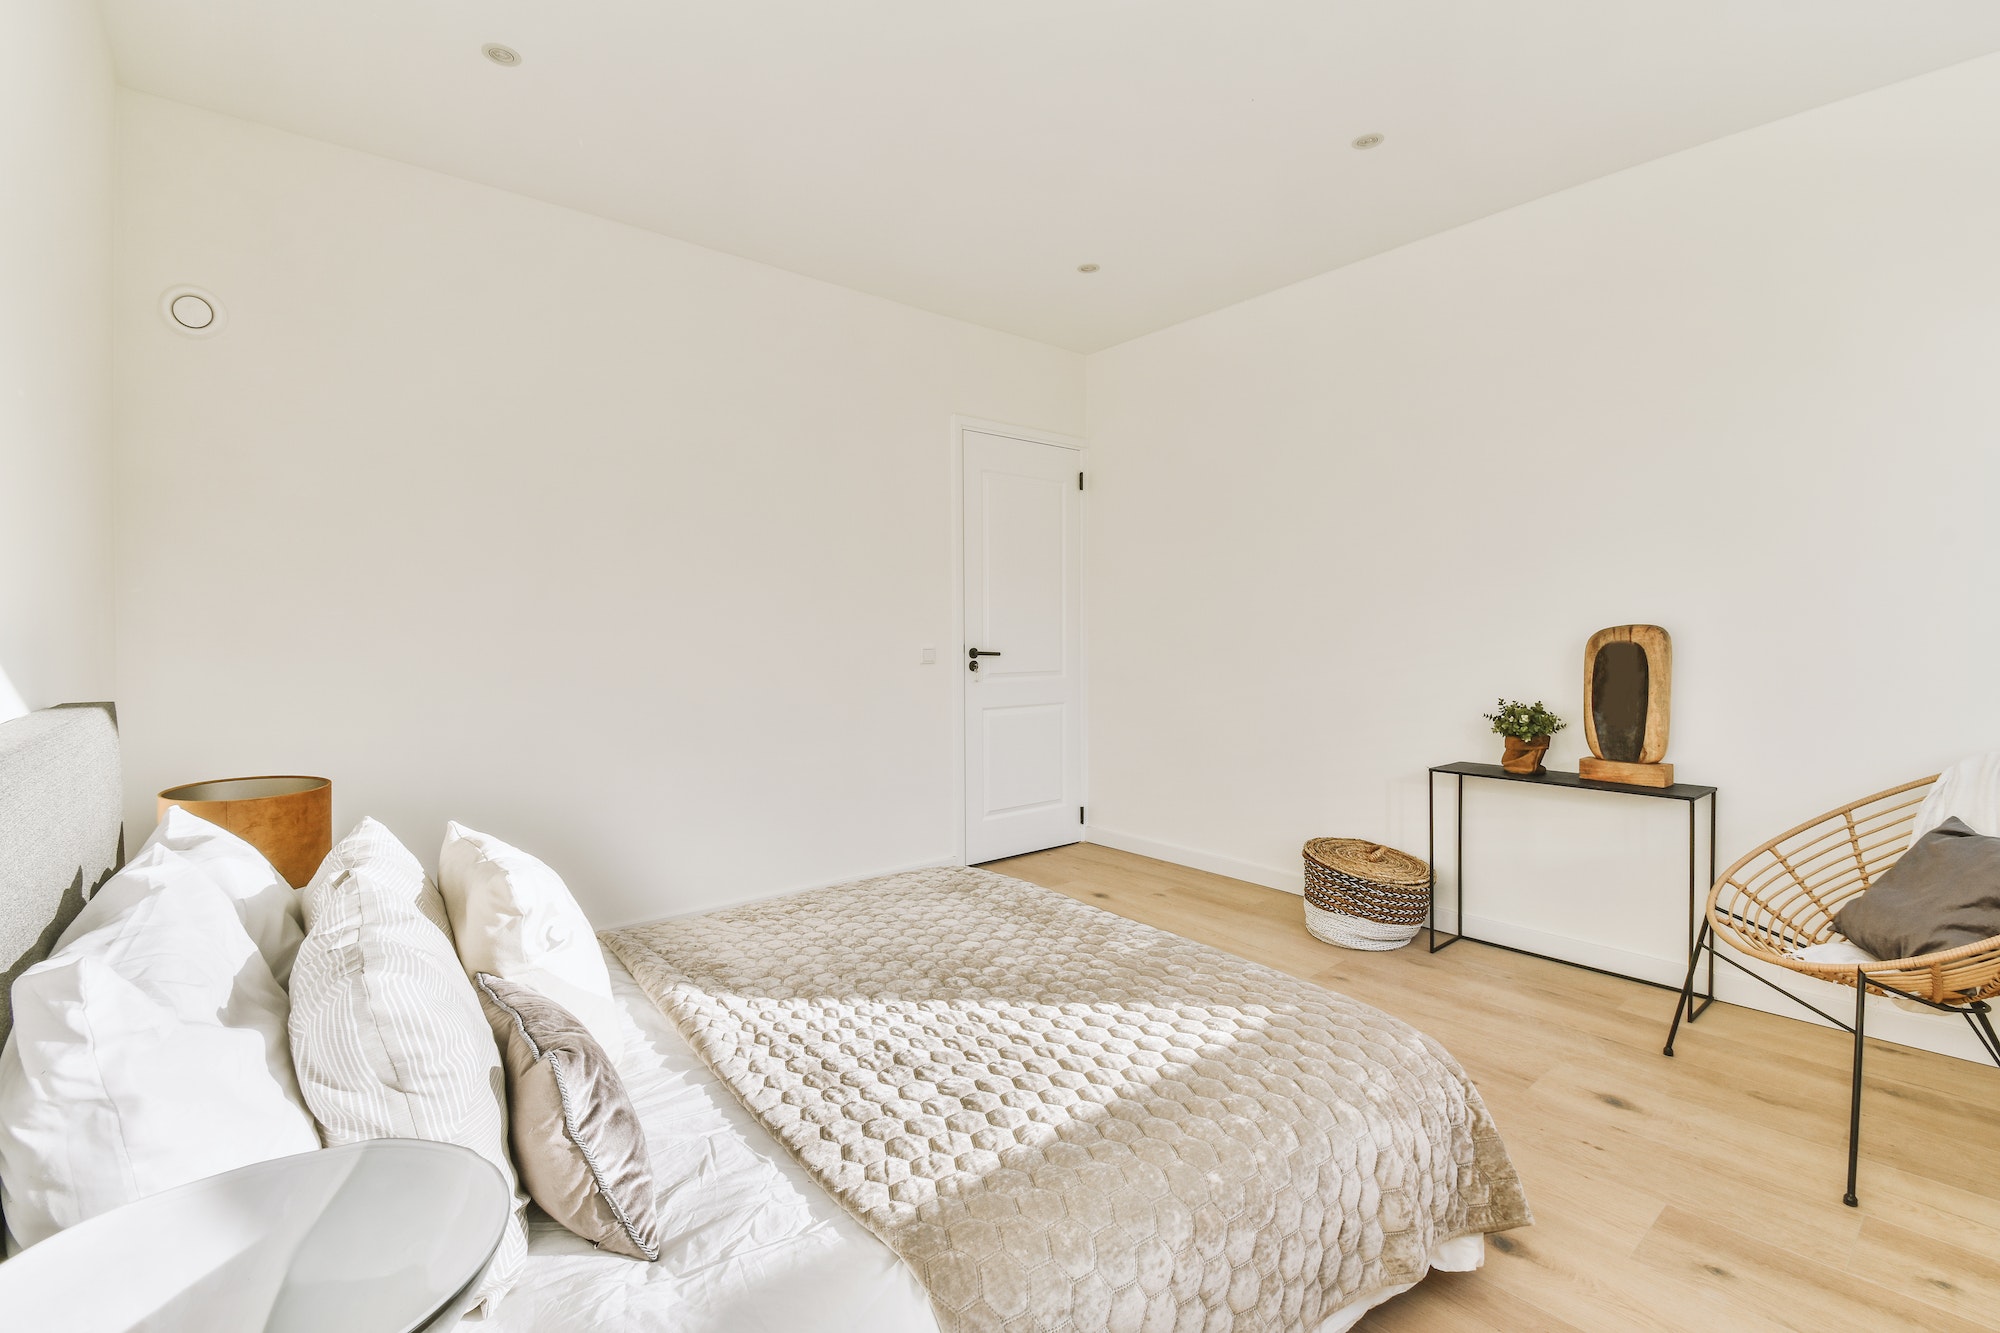 Bedroom with minimalist style furniture